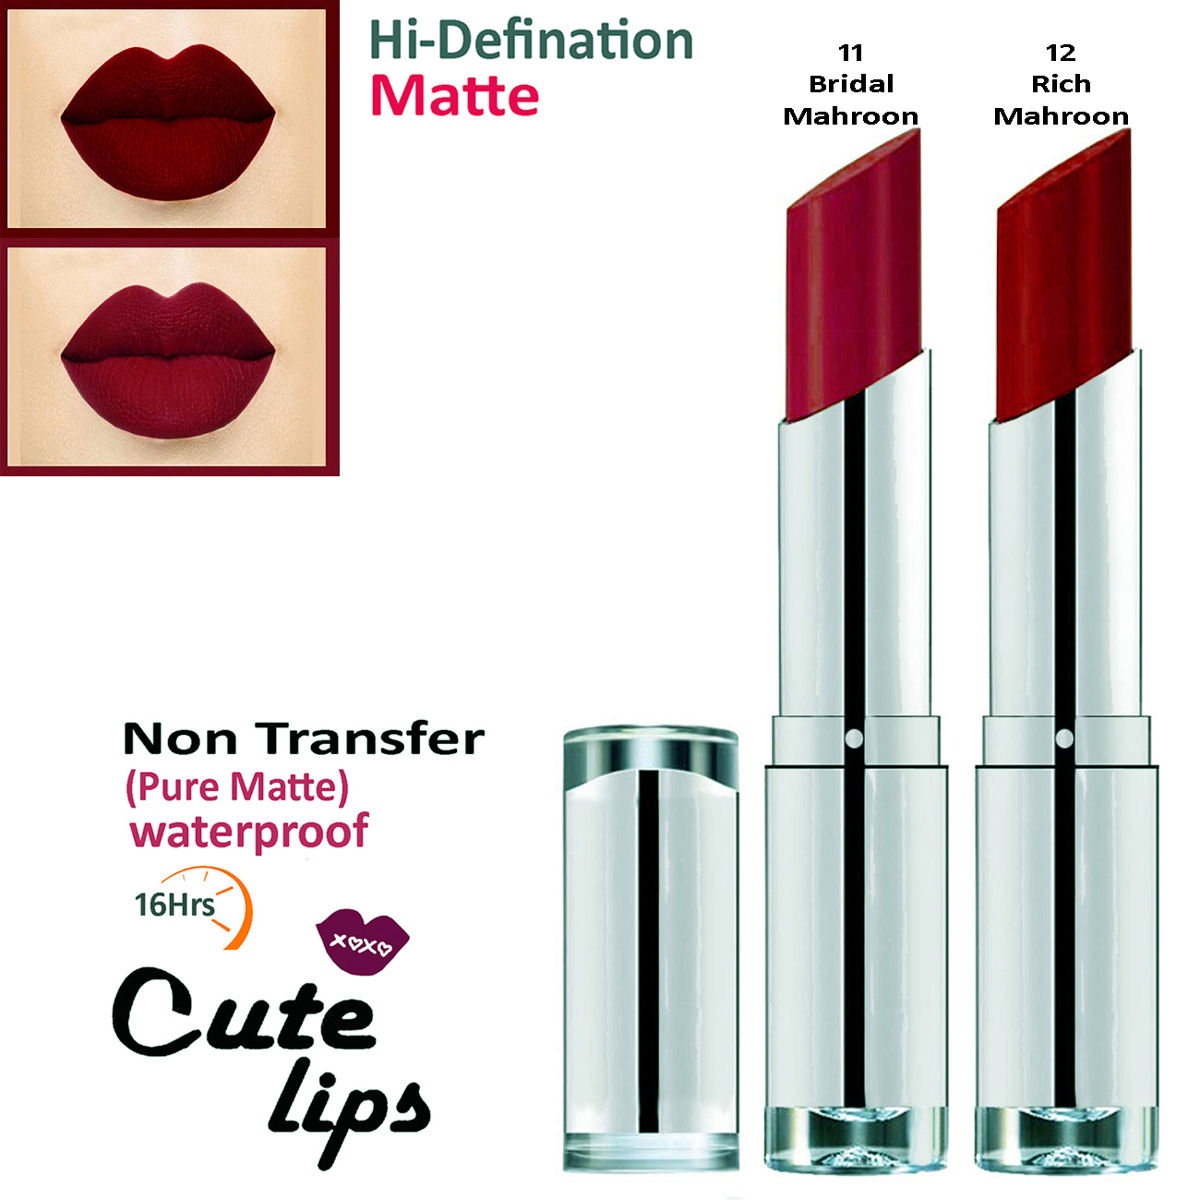 bq BLAQUE Cute Lips Non Transfer Matte Lipstick 2.4 gm each - 11 ...